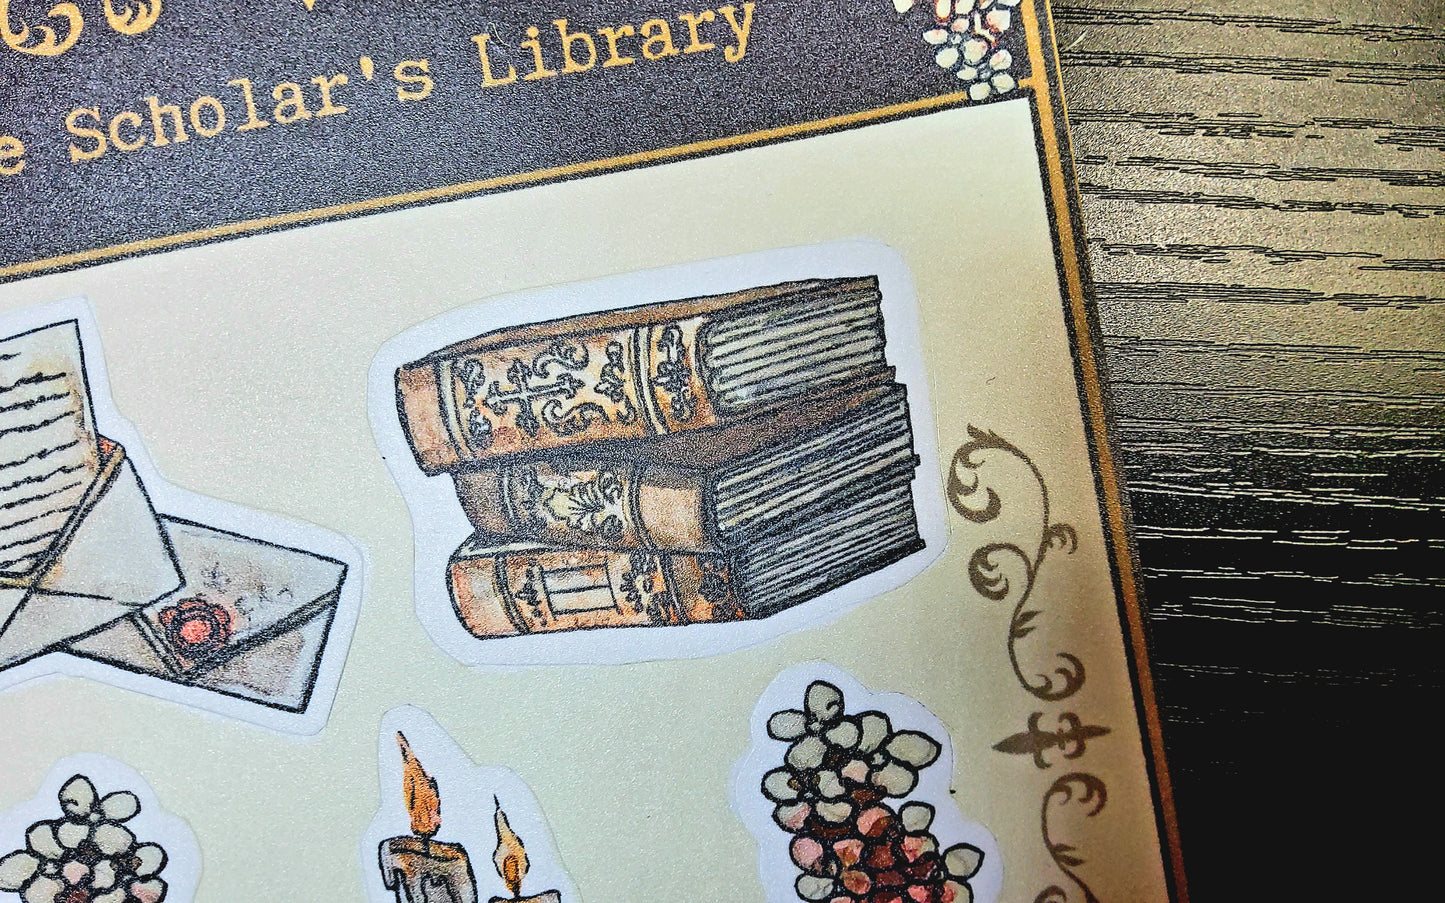 The Scholar's Library - Sticker Sheet